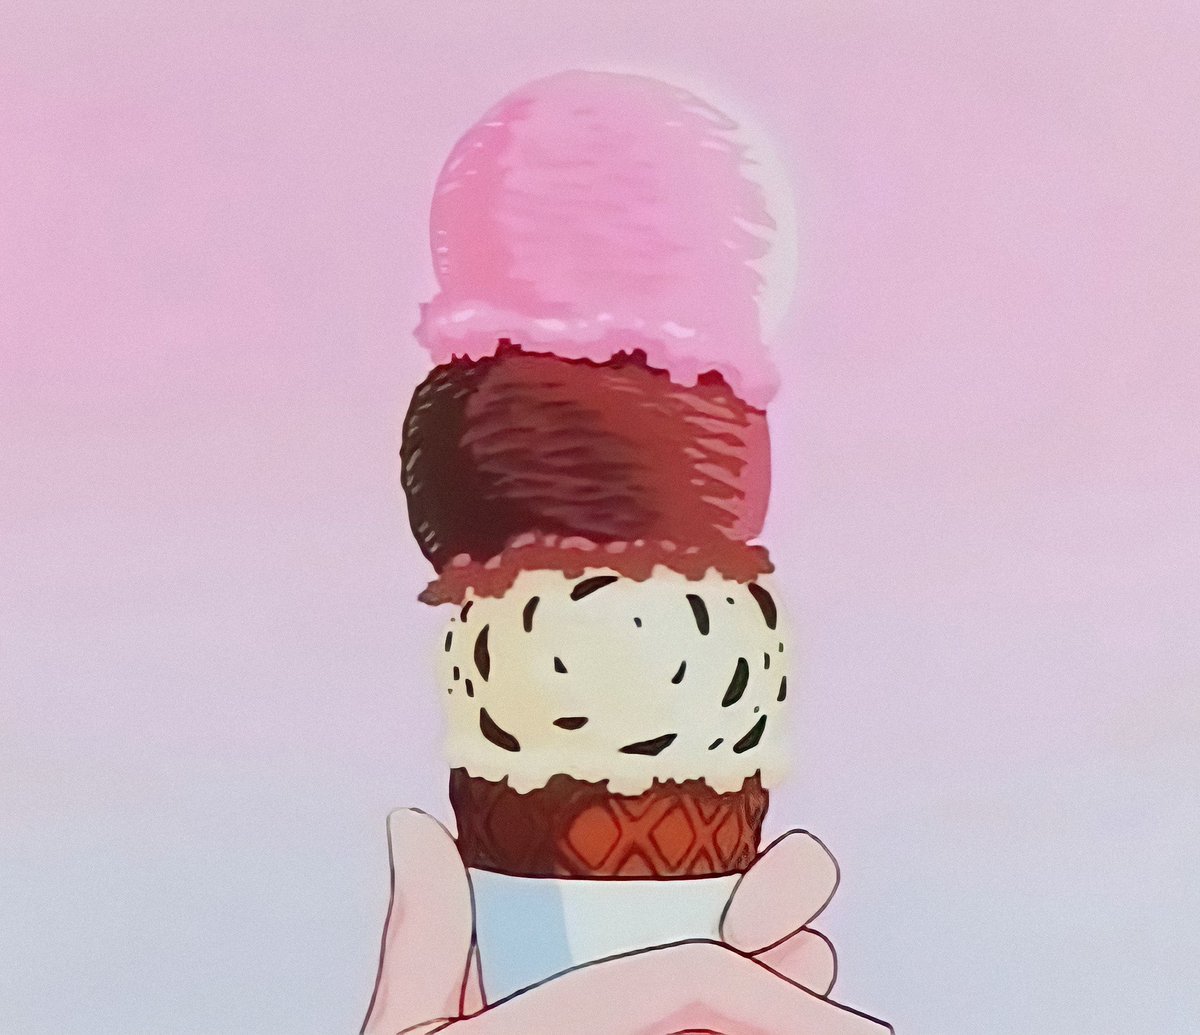 Hmv ice cream